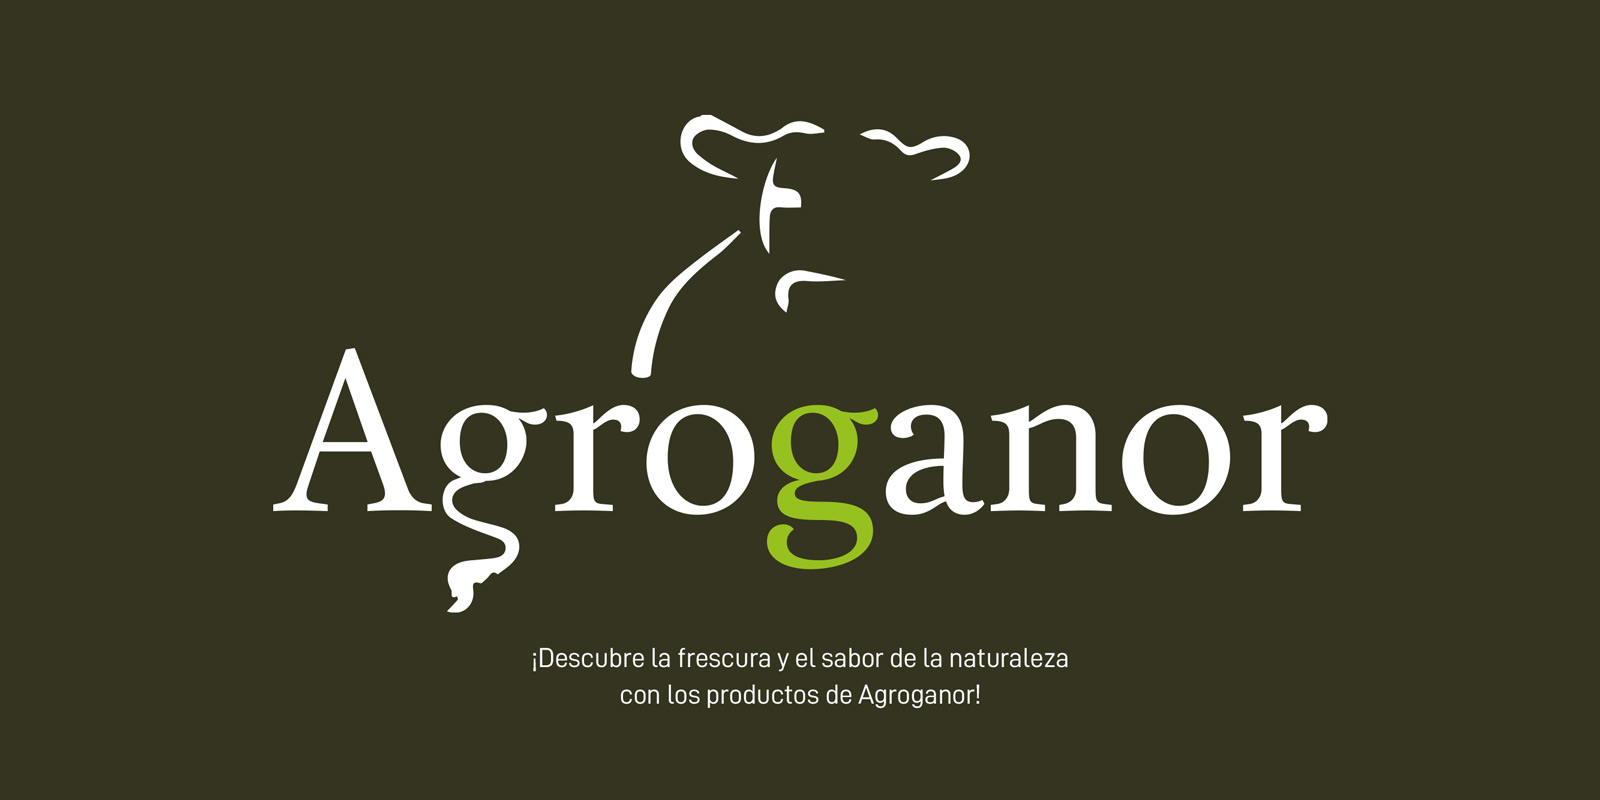 Creación de logo e imagen corporativa para empresa ganadera y agricultura